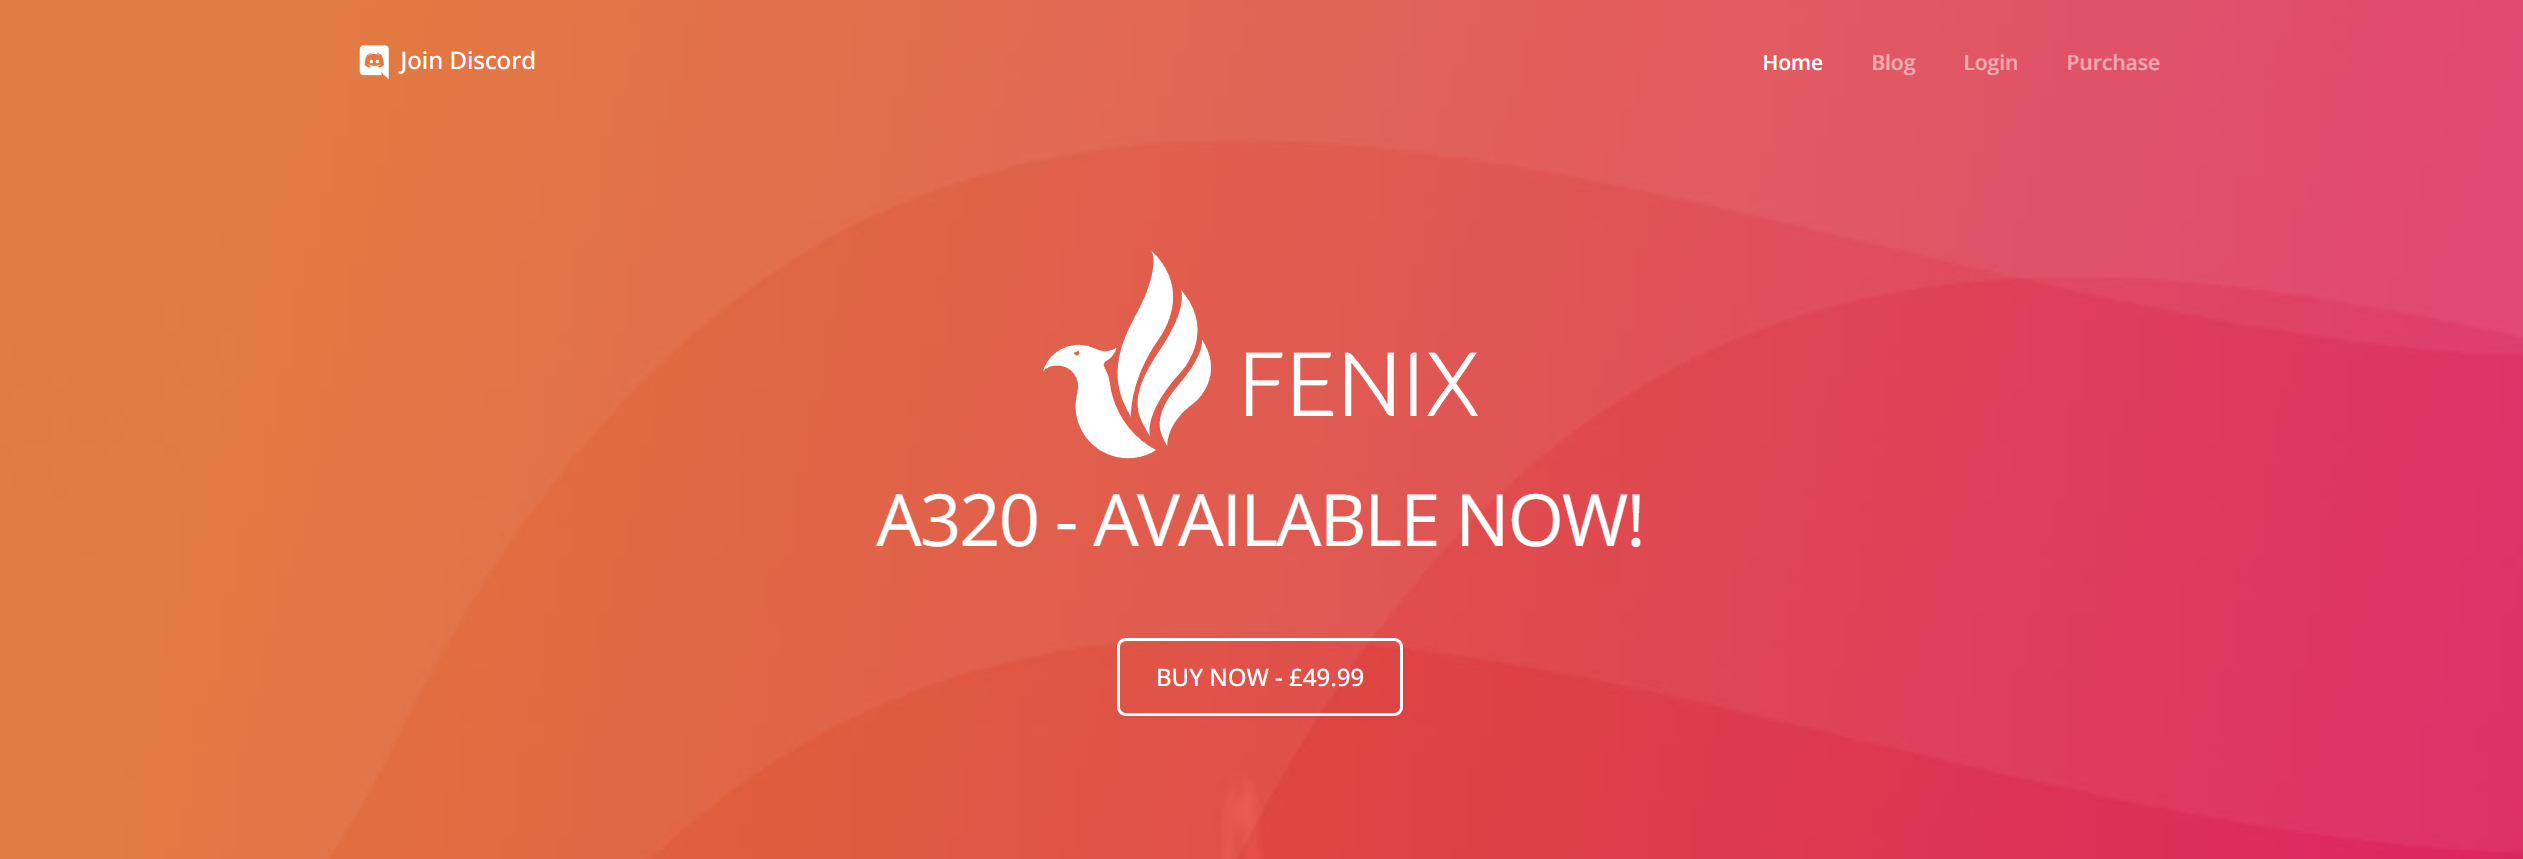 FENIX A320正版机模代购 - 万顷琉璃-万顷琉璃